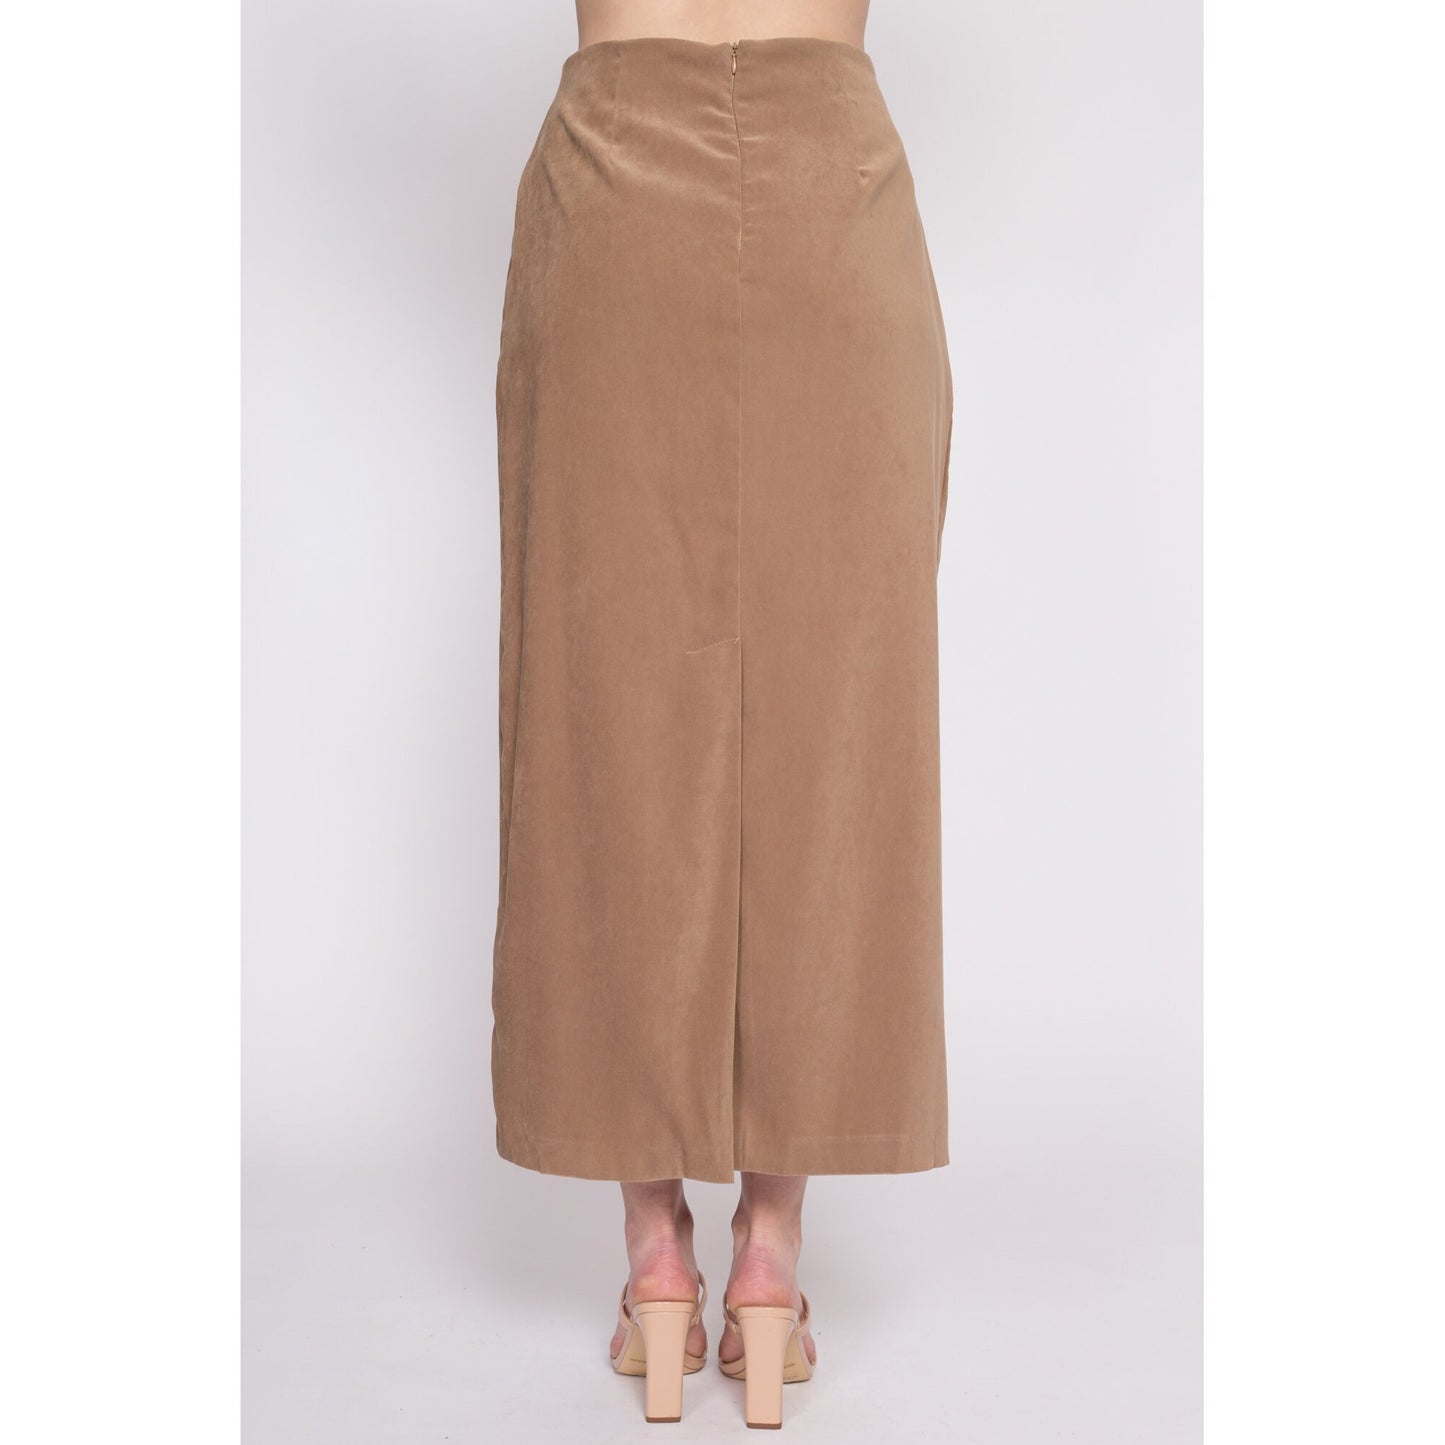 90s Tan Ultrasuede Maxi Skirt - Medium | Vintage Minimalist High Waisted A Line Skirt